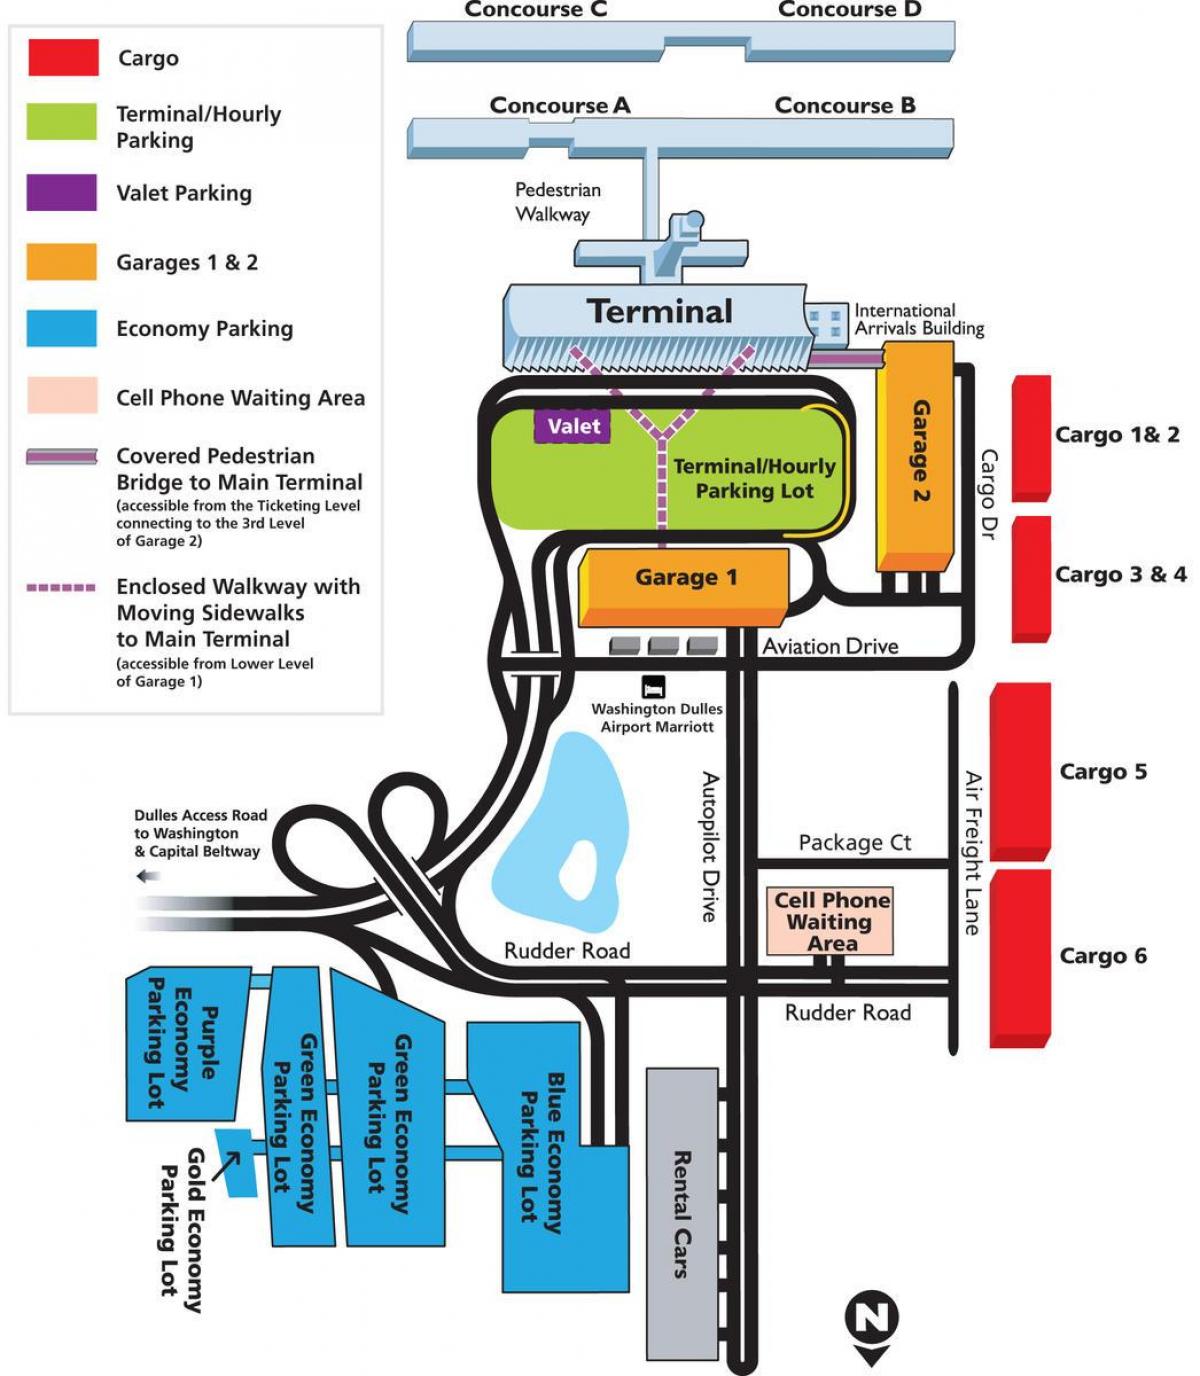 Karte von dulles airport area